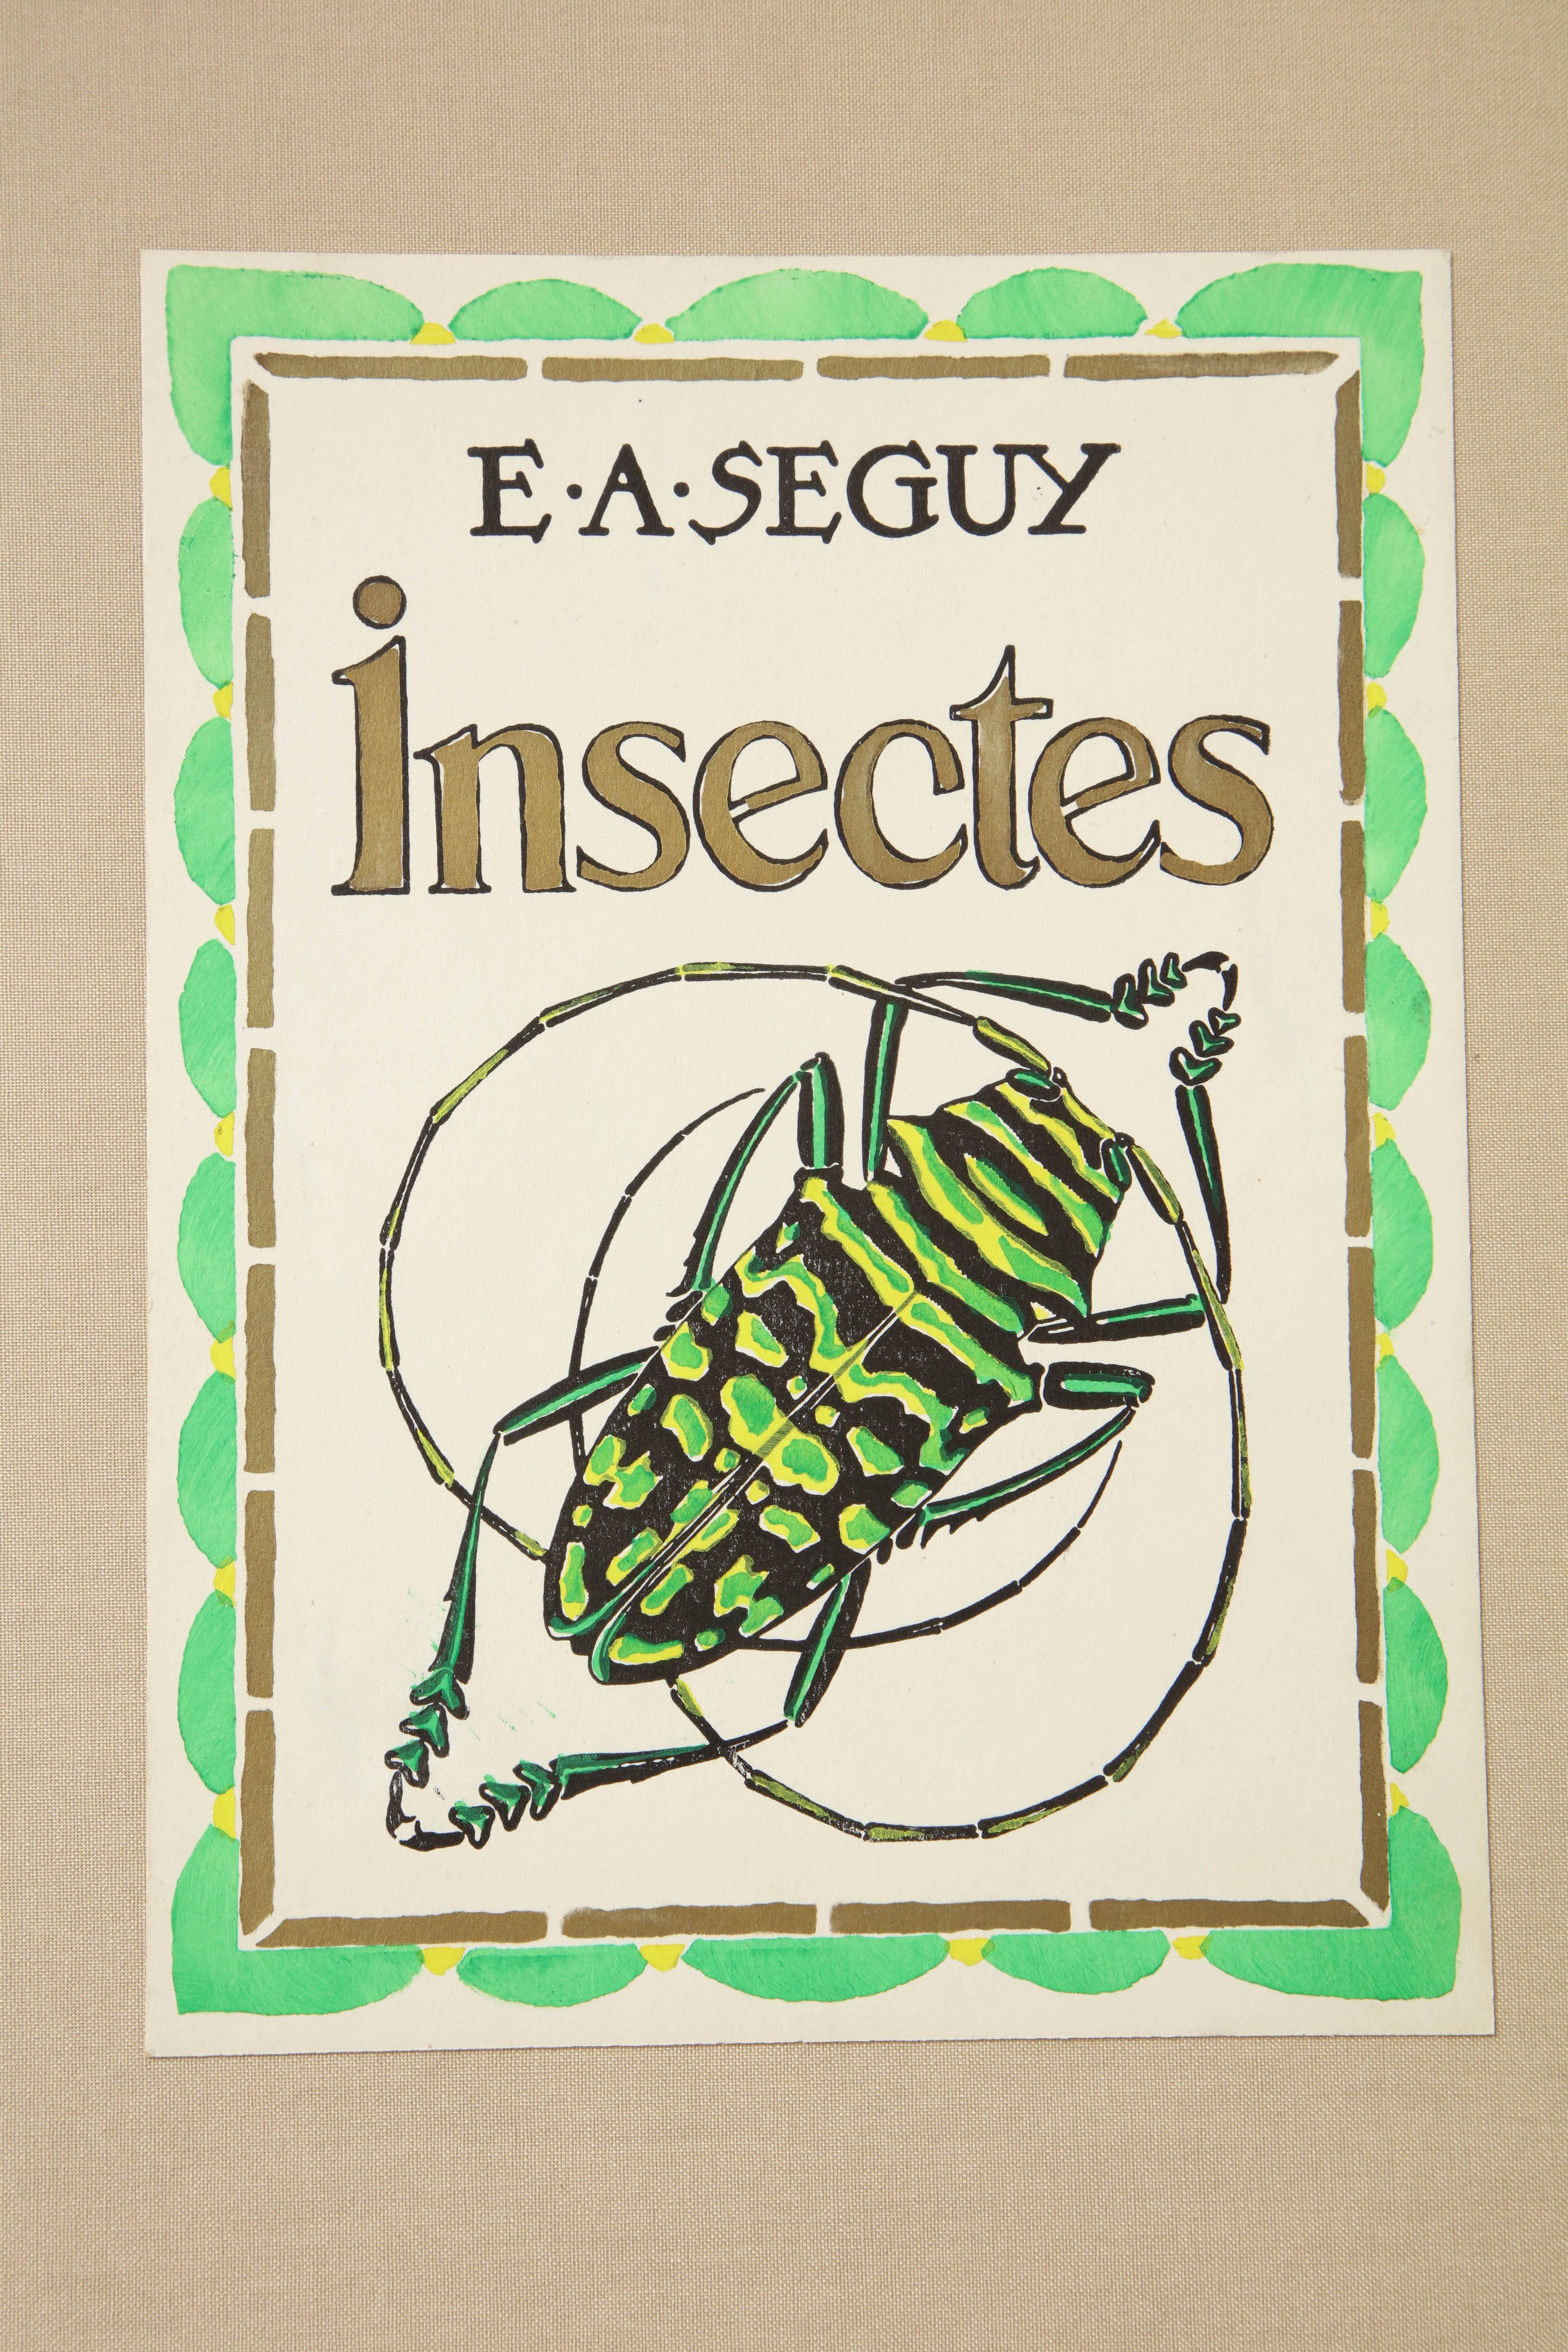 'Insectes' by E.A. Seguy (1877-1945), Paris
Published by Edition Ducharte et Van Buggenhoudt, Paris, 1925

20 plates (Pochoirs in Color) (Complete) 12 3/4'' wide by 17 3/4'' high

Plates 1 through 16 show five large specimens per plate in